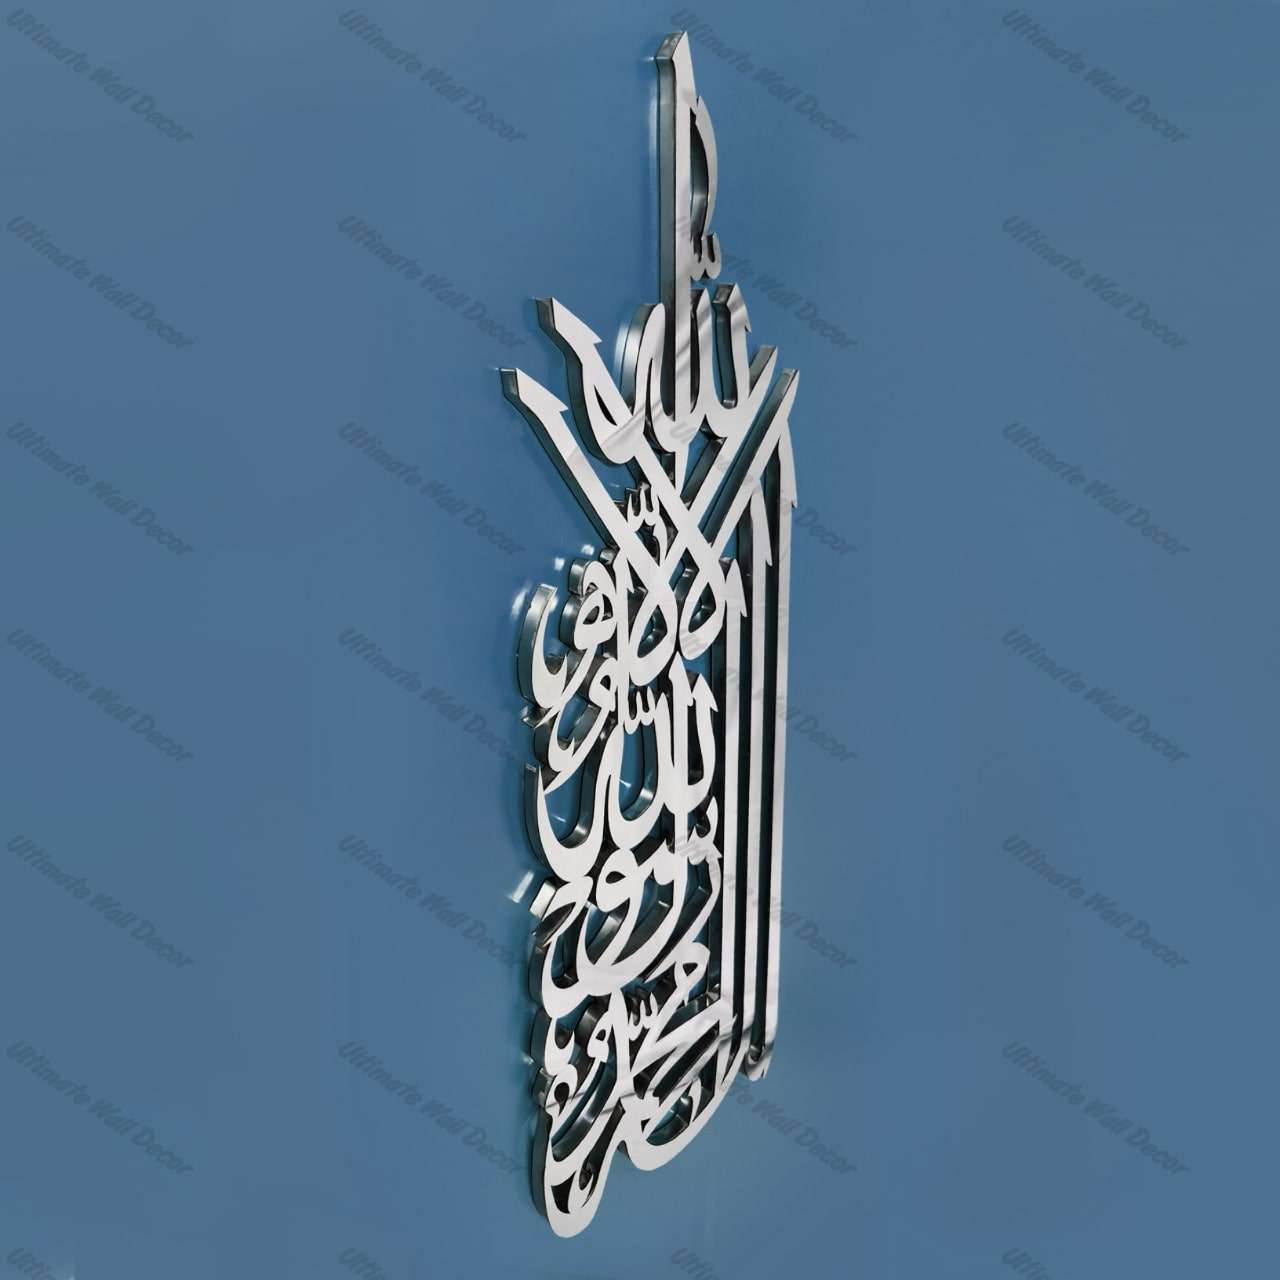 Vertical Kalma - Islamic (Arabic Calligraphy) 3D Stainless Steel Wall Art